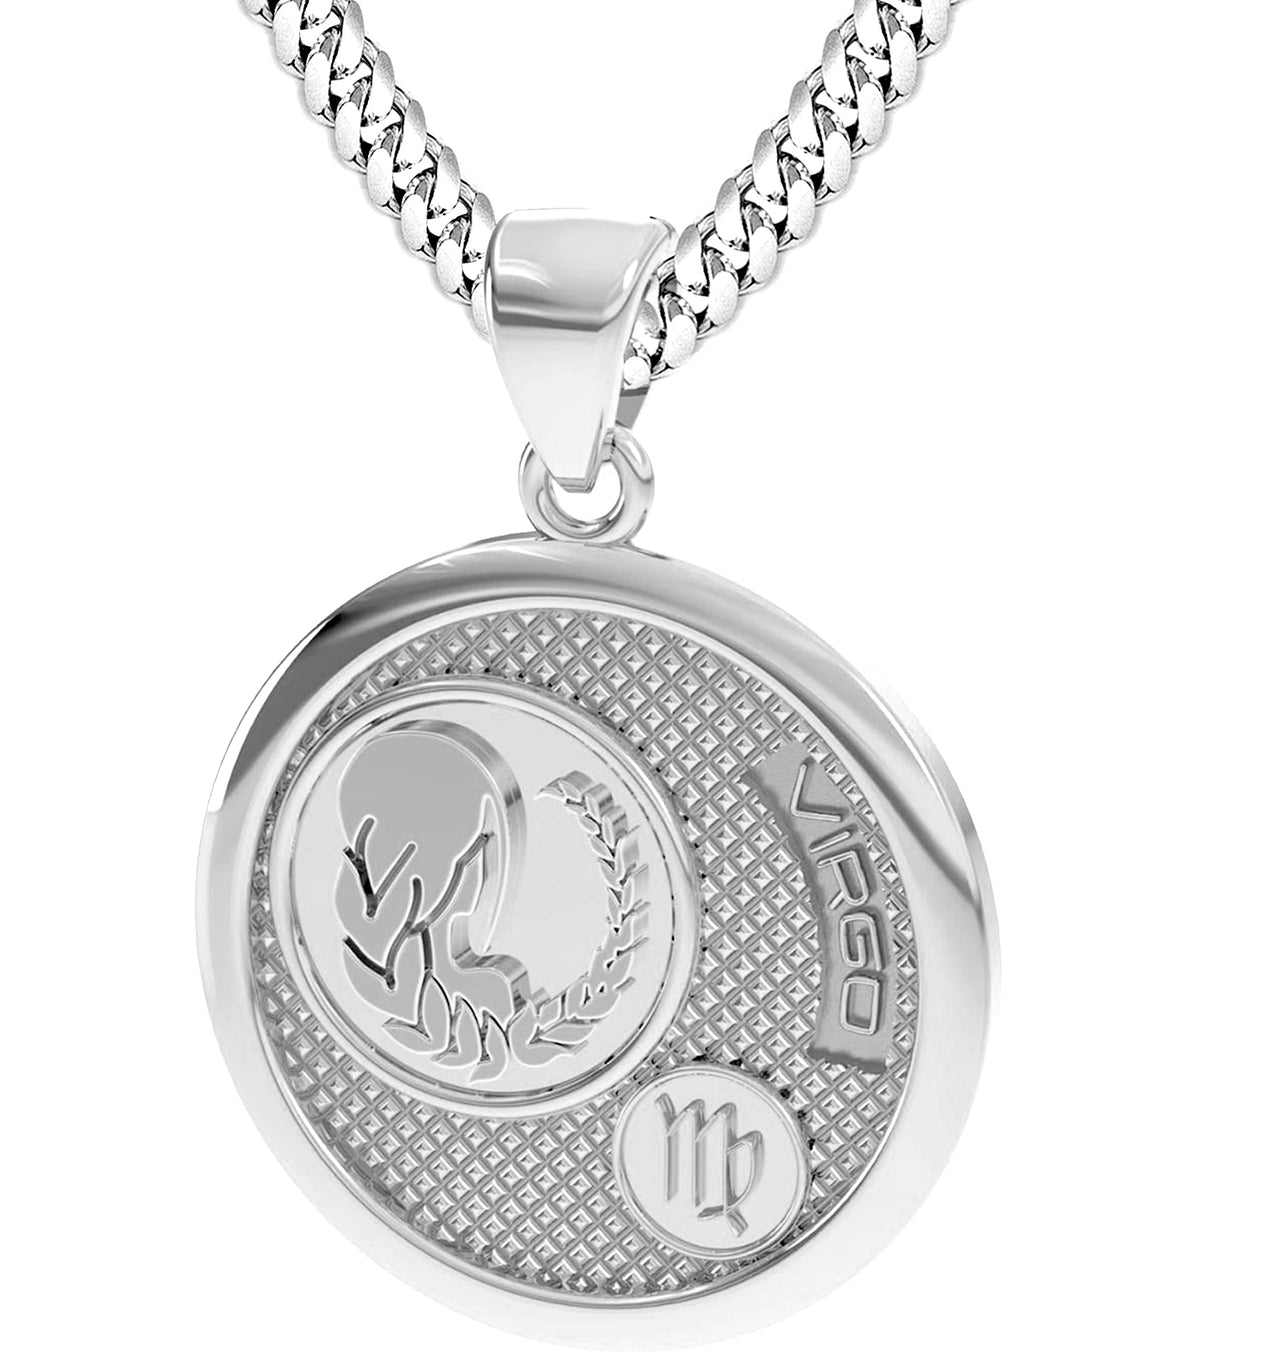 Men's 925 Sterling Silver Round Virgo Zodiac Polished Finish Pendant Necklace, 33mm